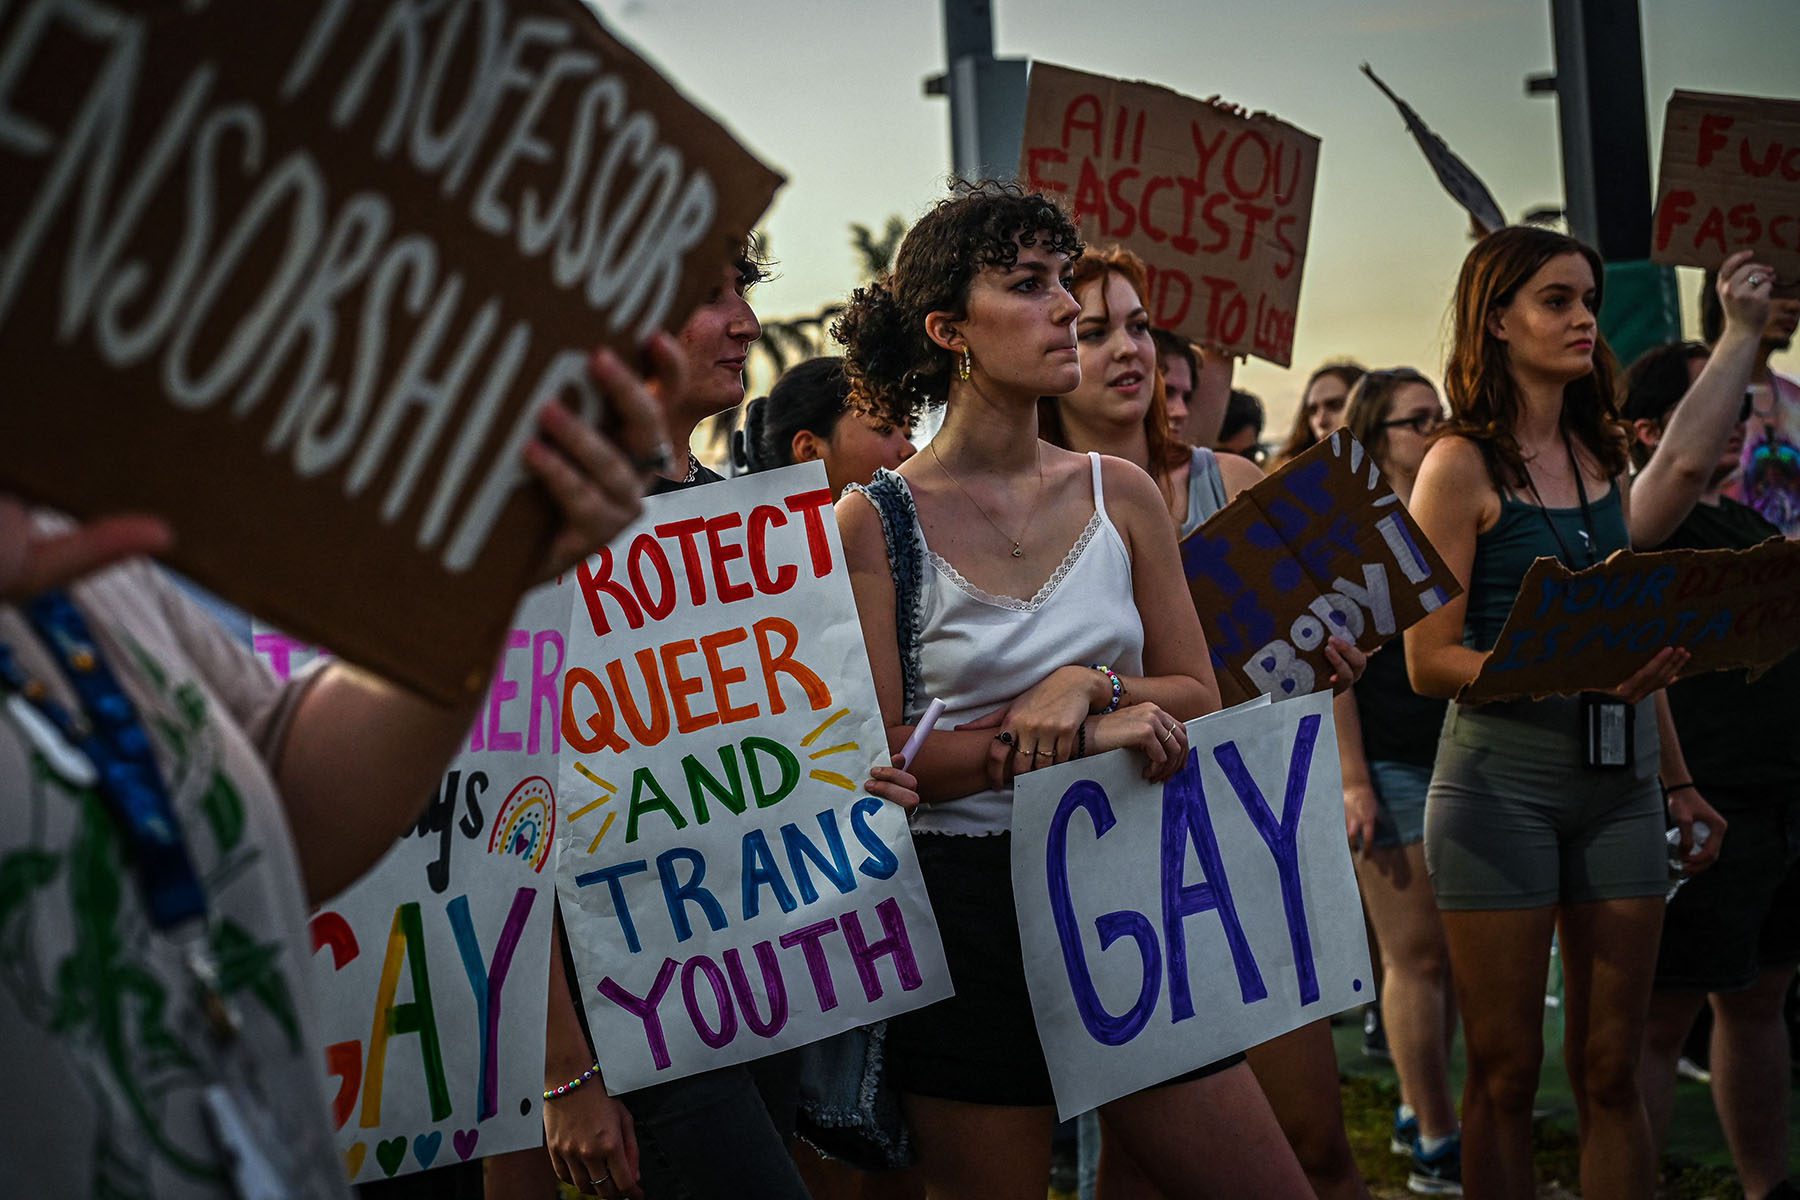 Canceled Florida school play raises censorship concerns amid Dont Say Gay photo